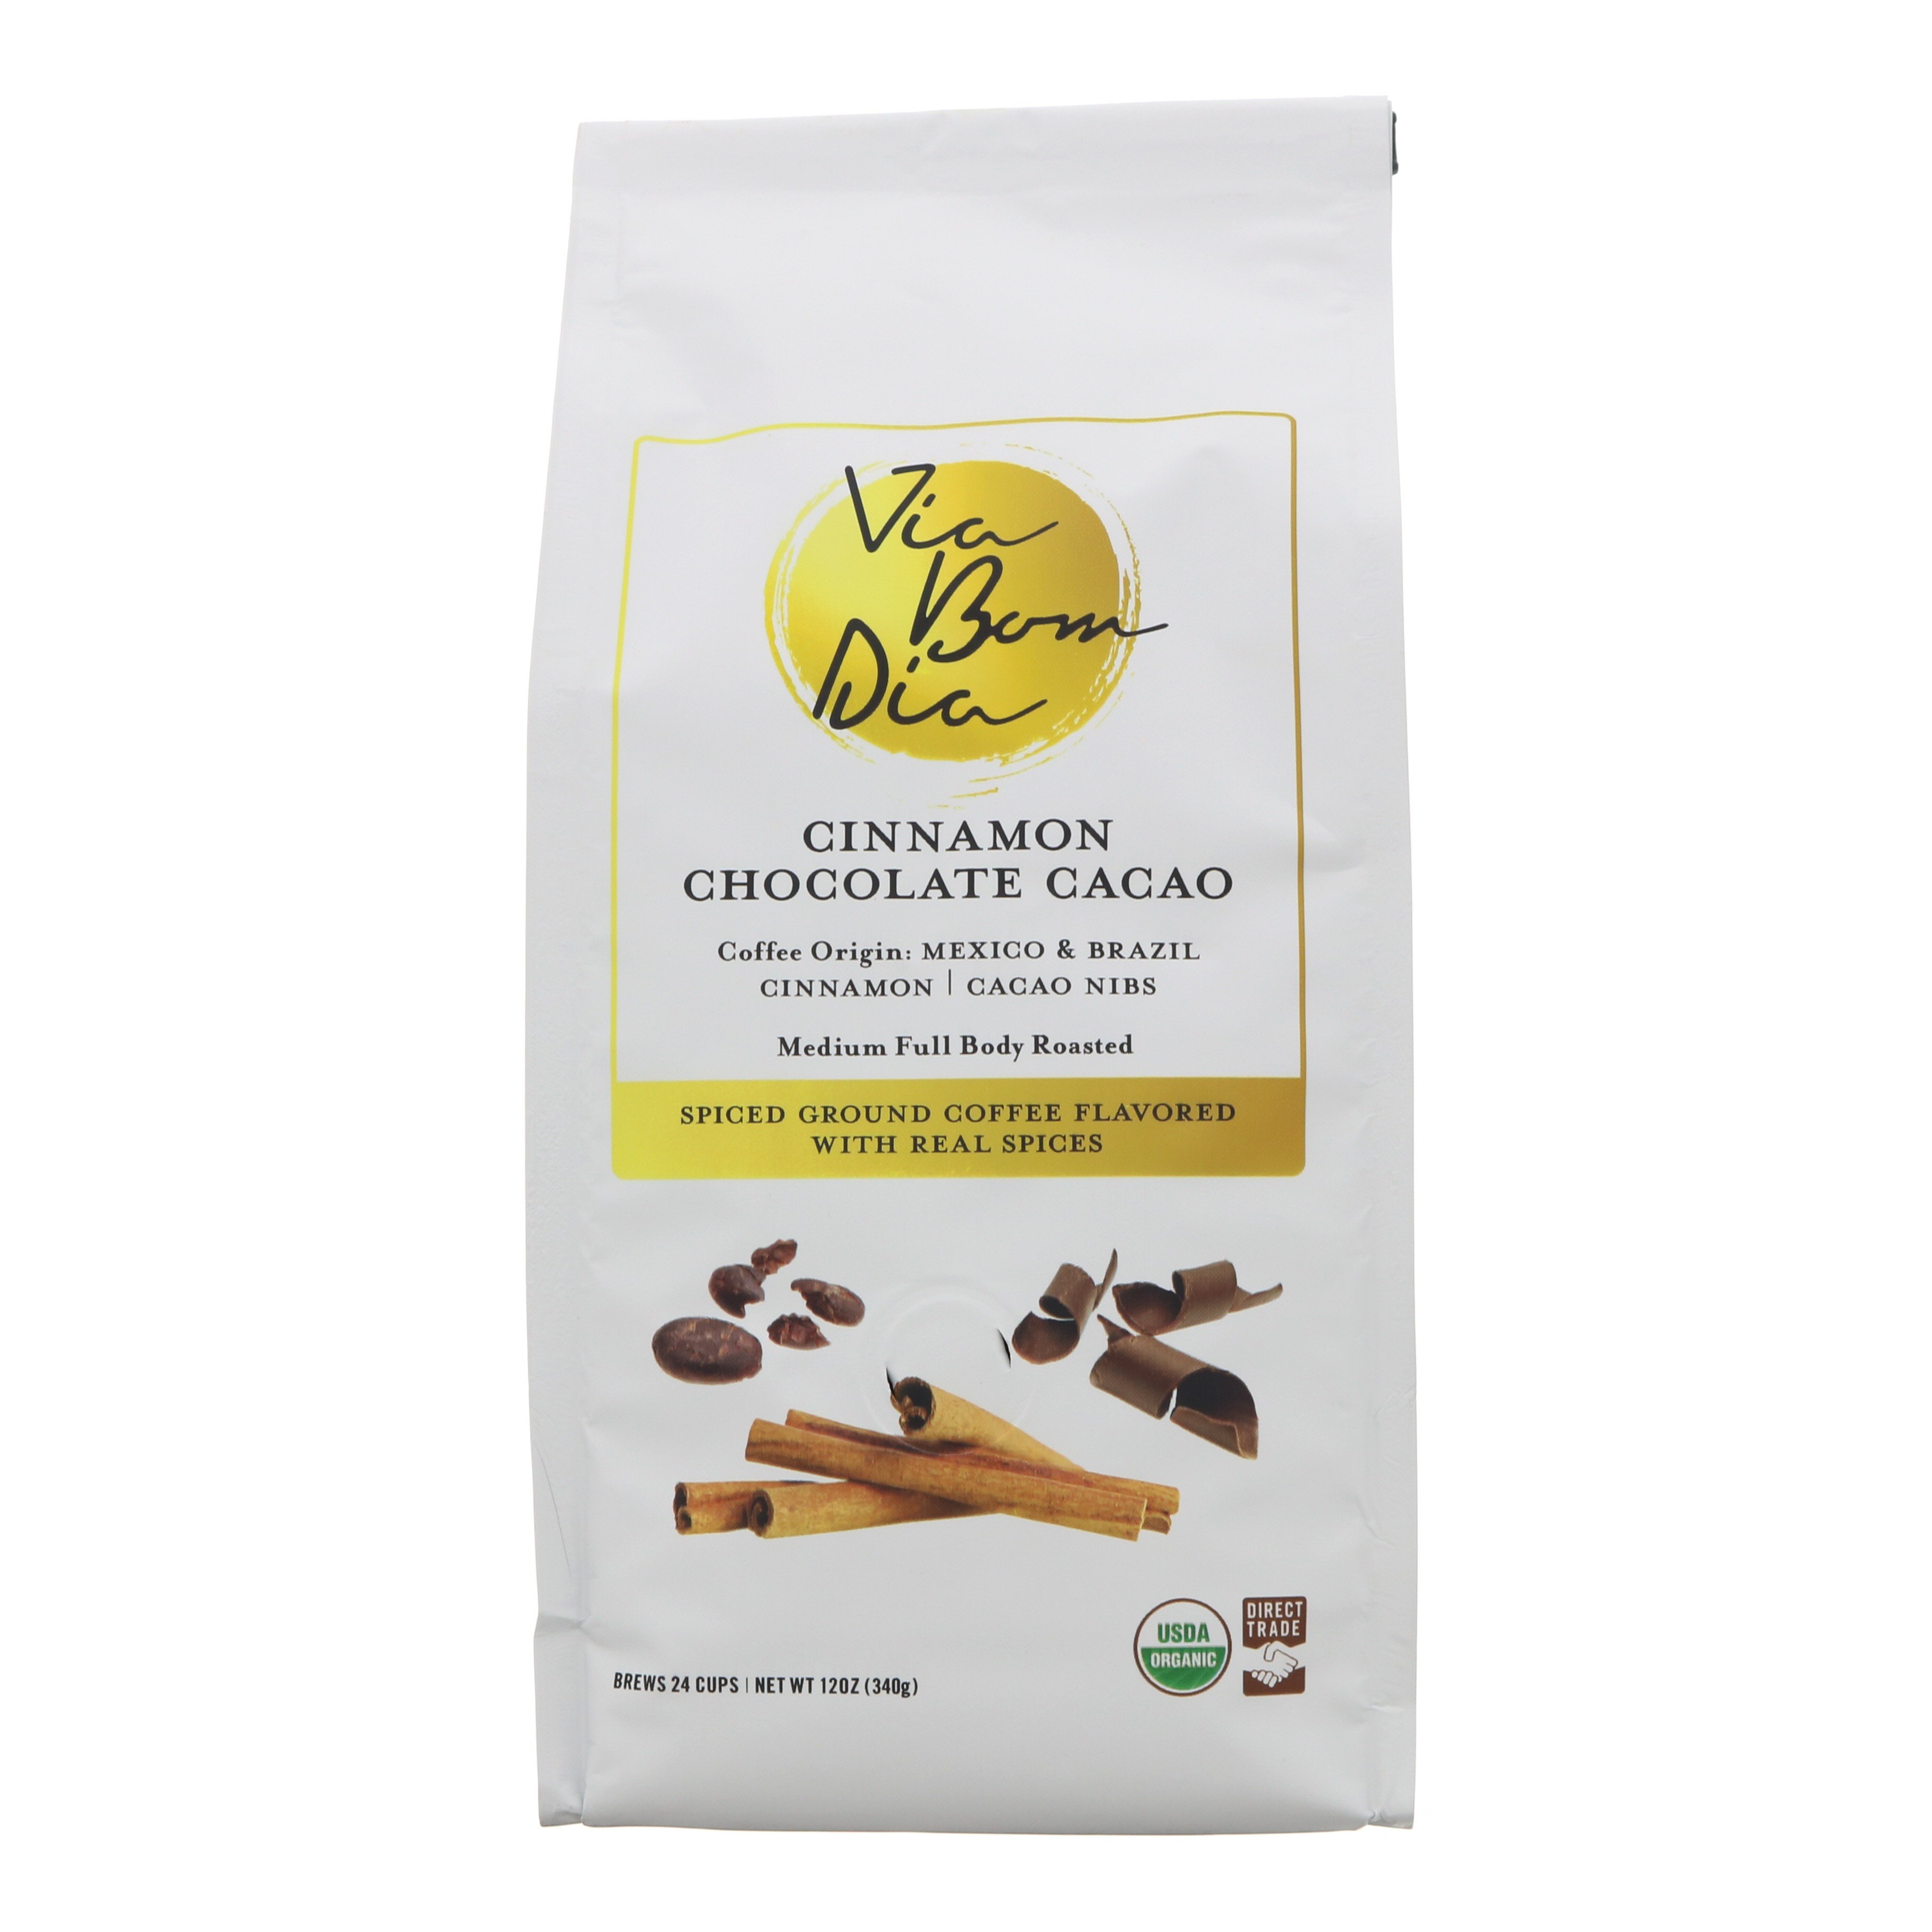 Via Bom Dia Cinnamon Chocolate Cacao Ground Coffee - Shop Coffee at H-E-B